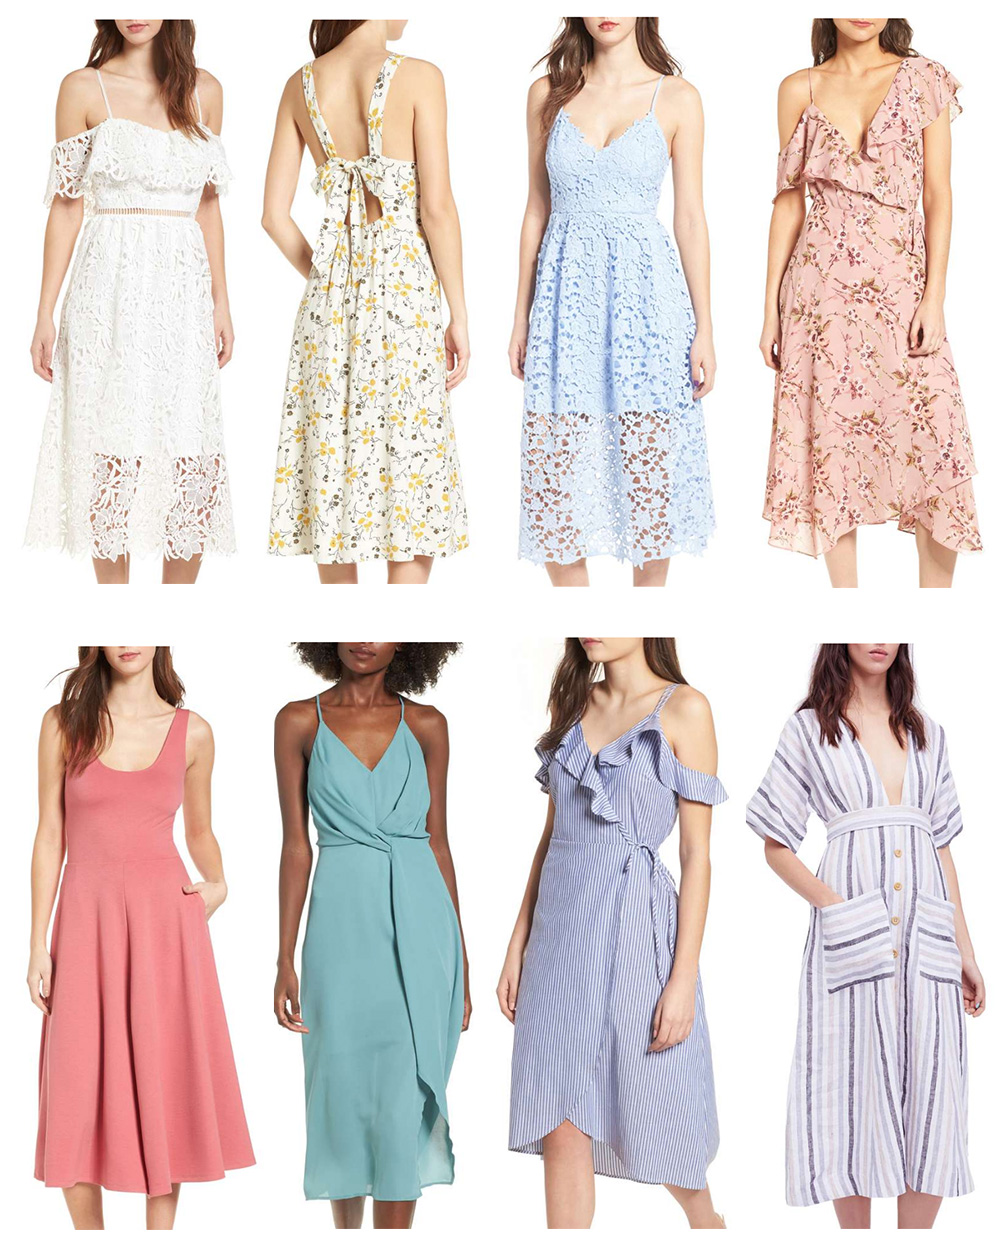 Spring Style / Best Dresses Under $100